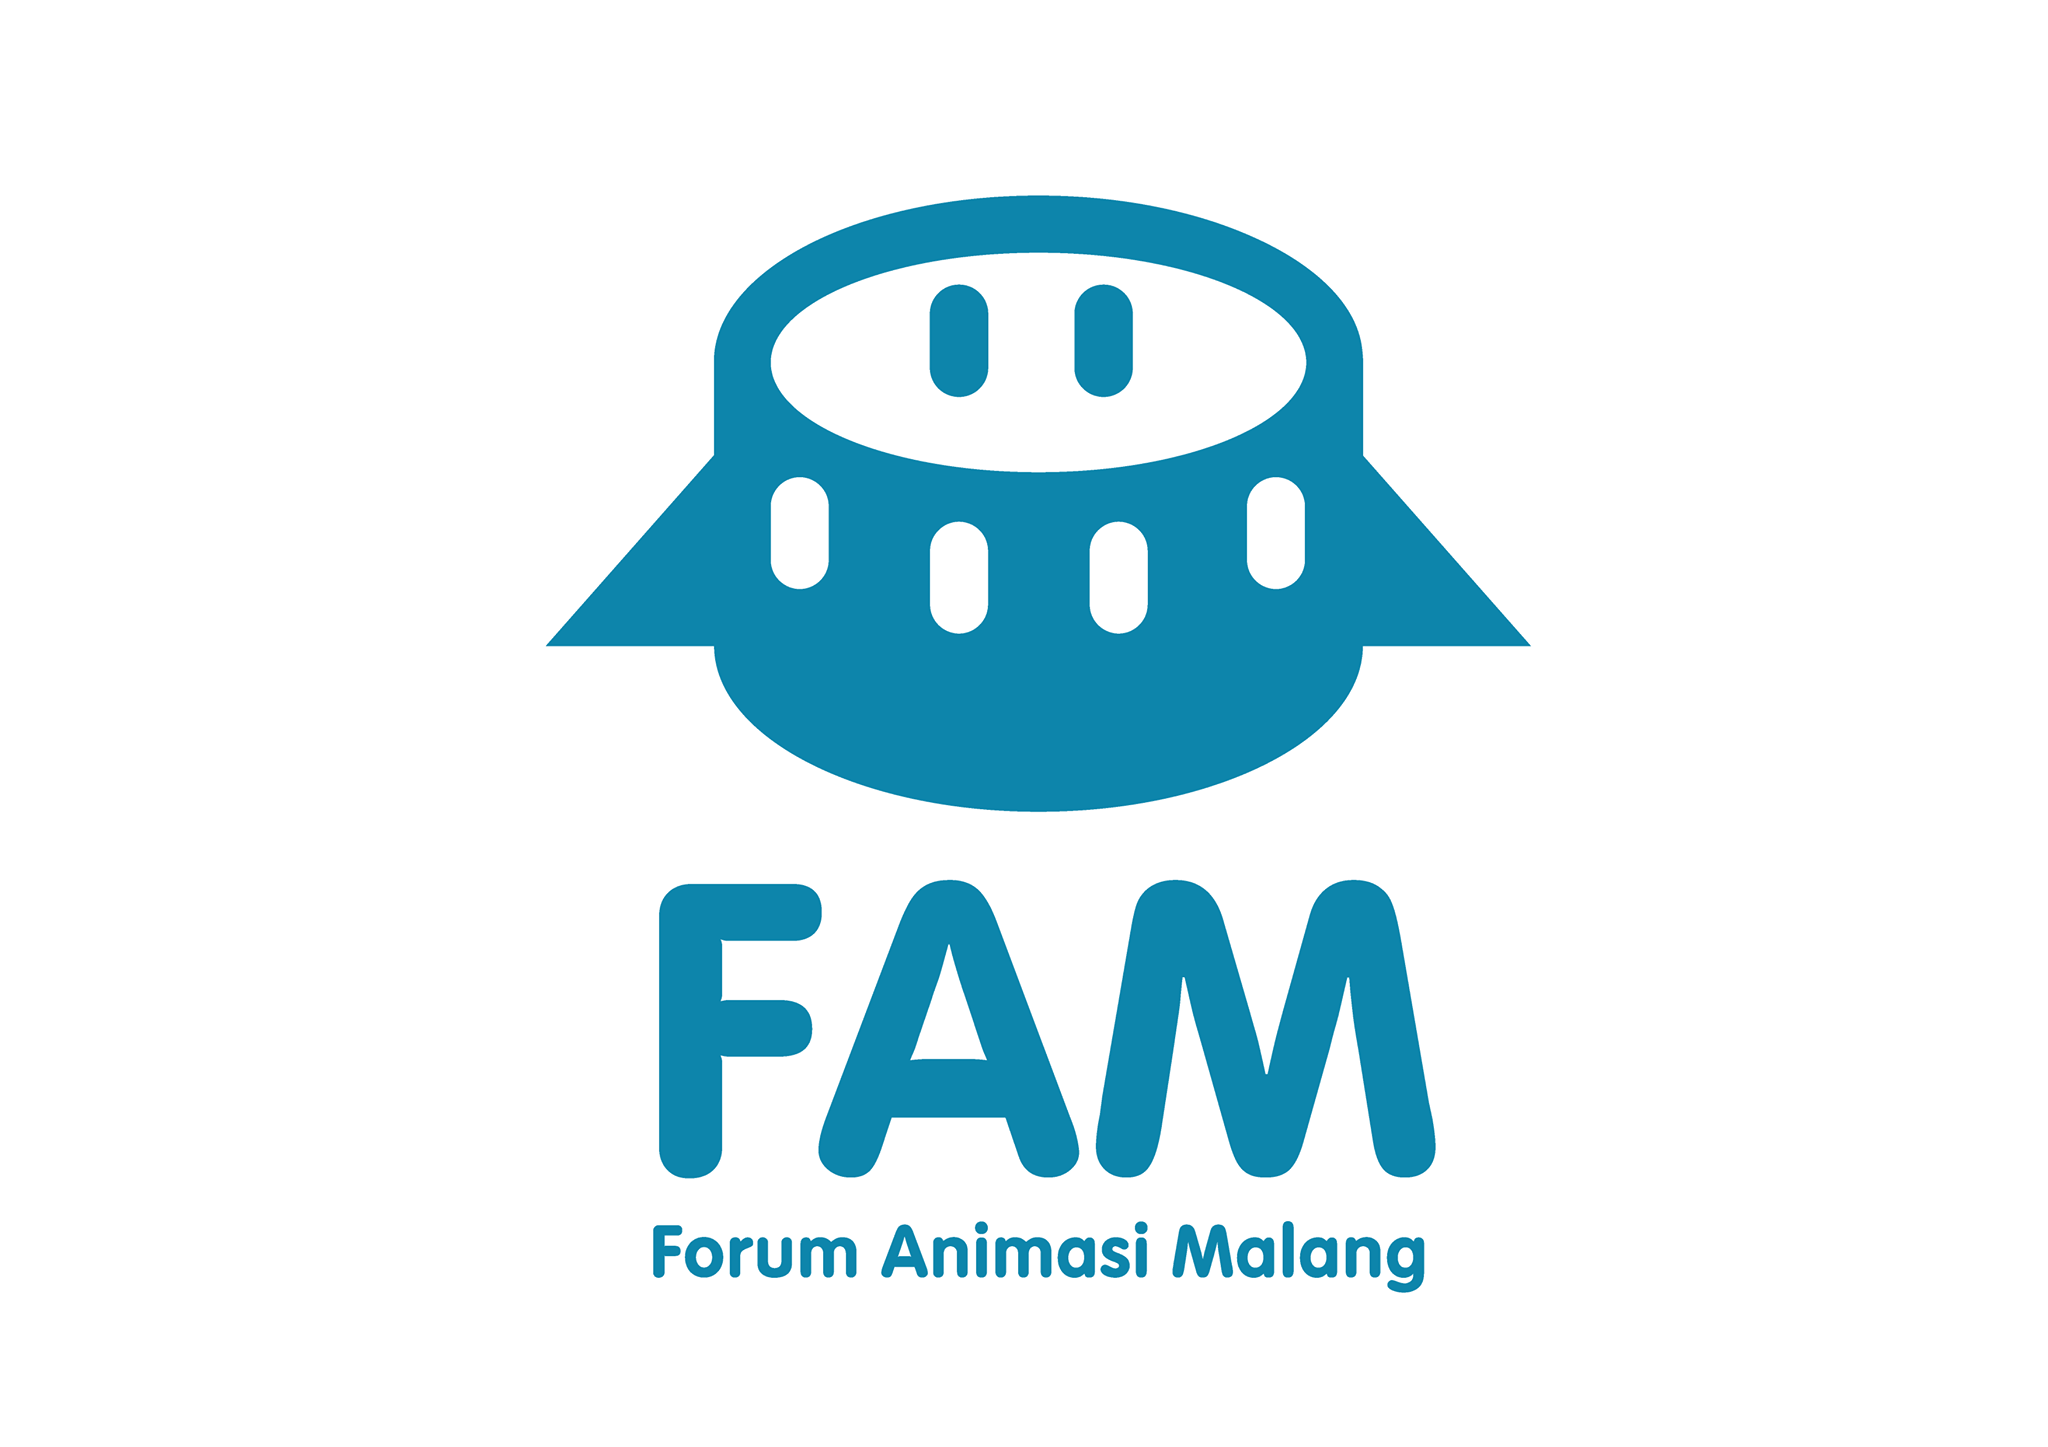 Forum Animasi Malang